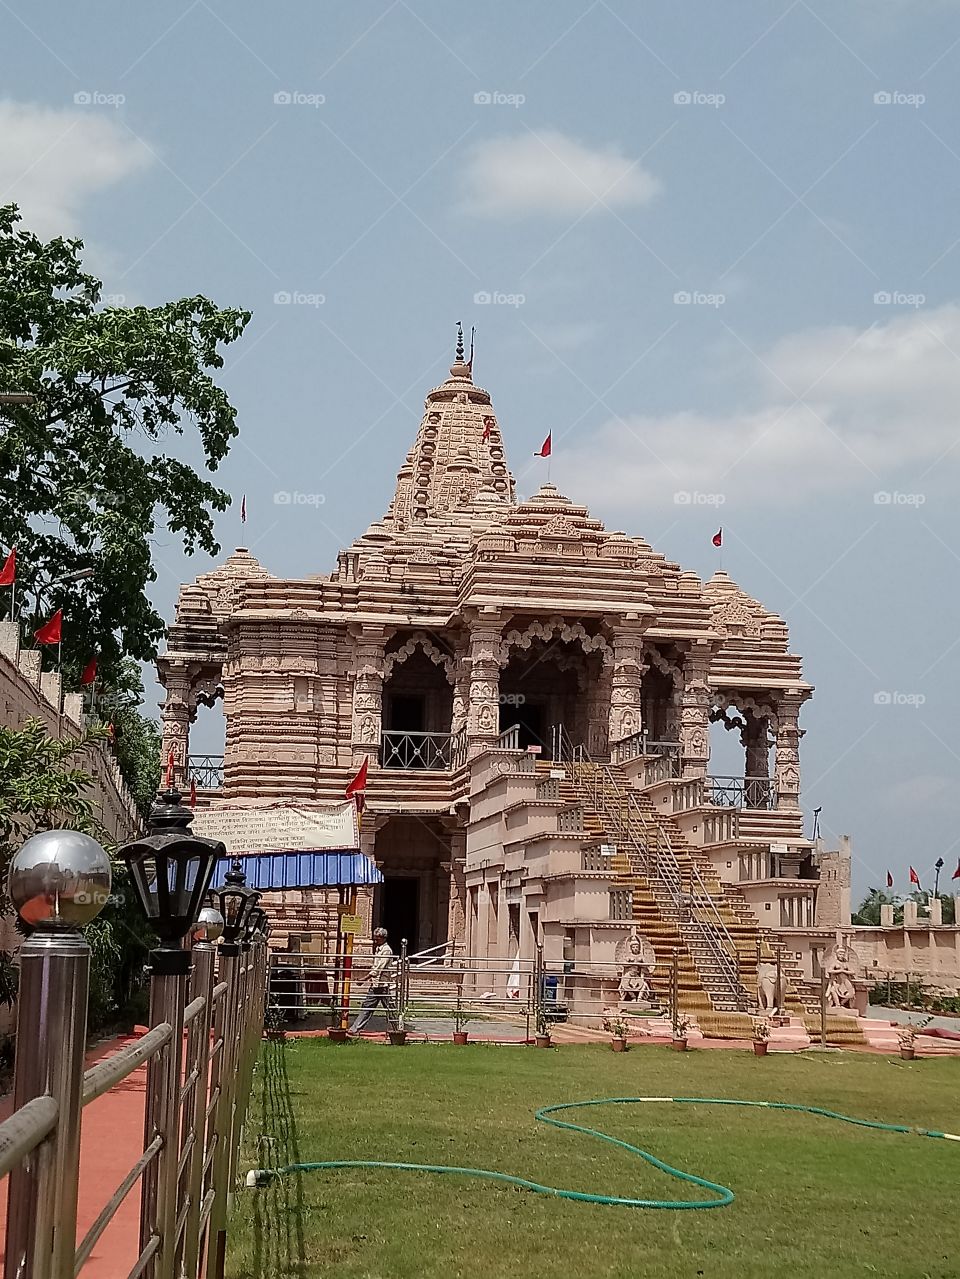 The hanuman temple